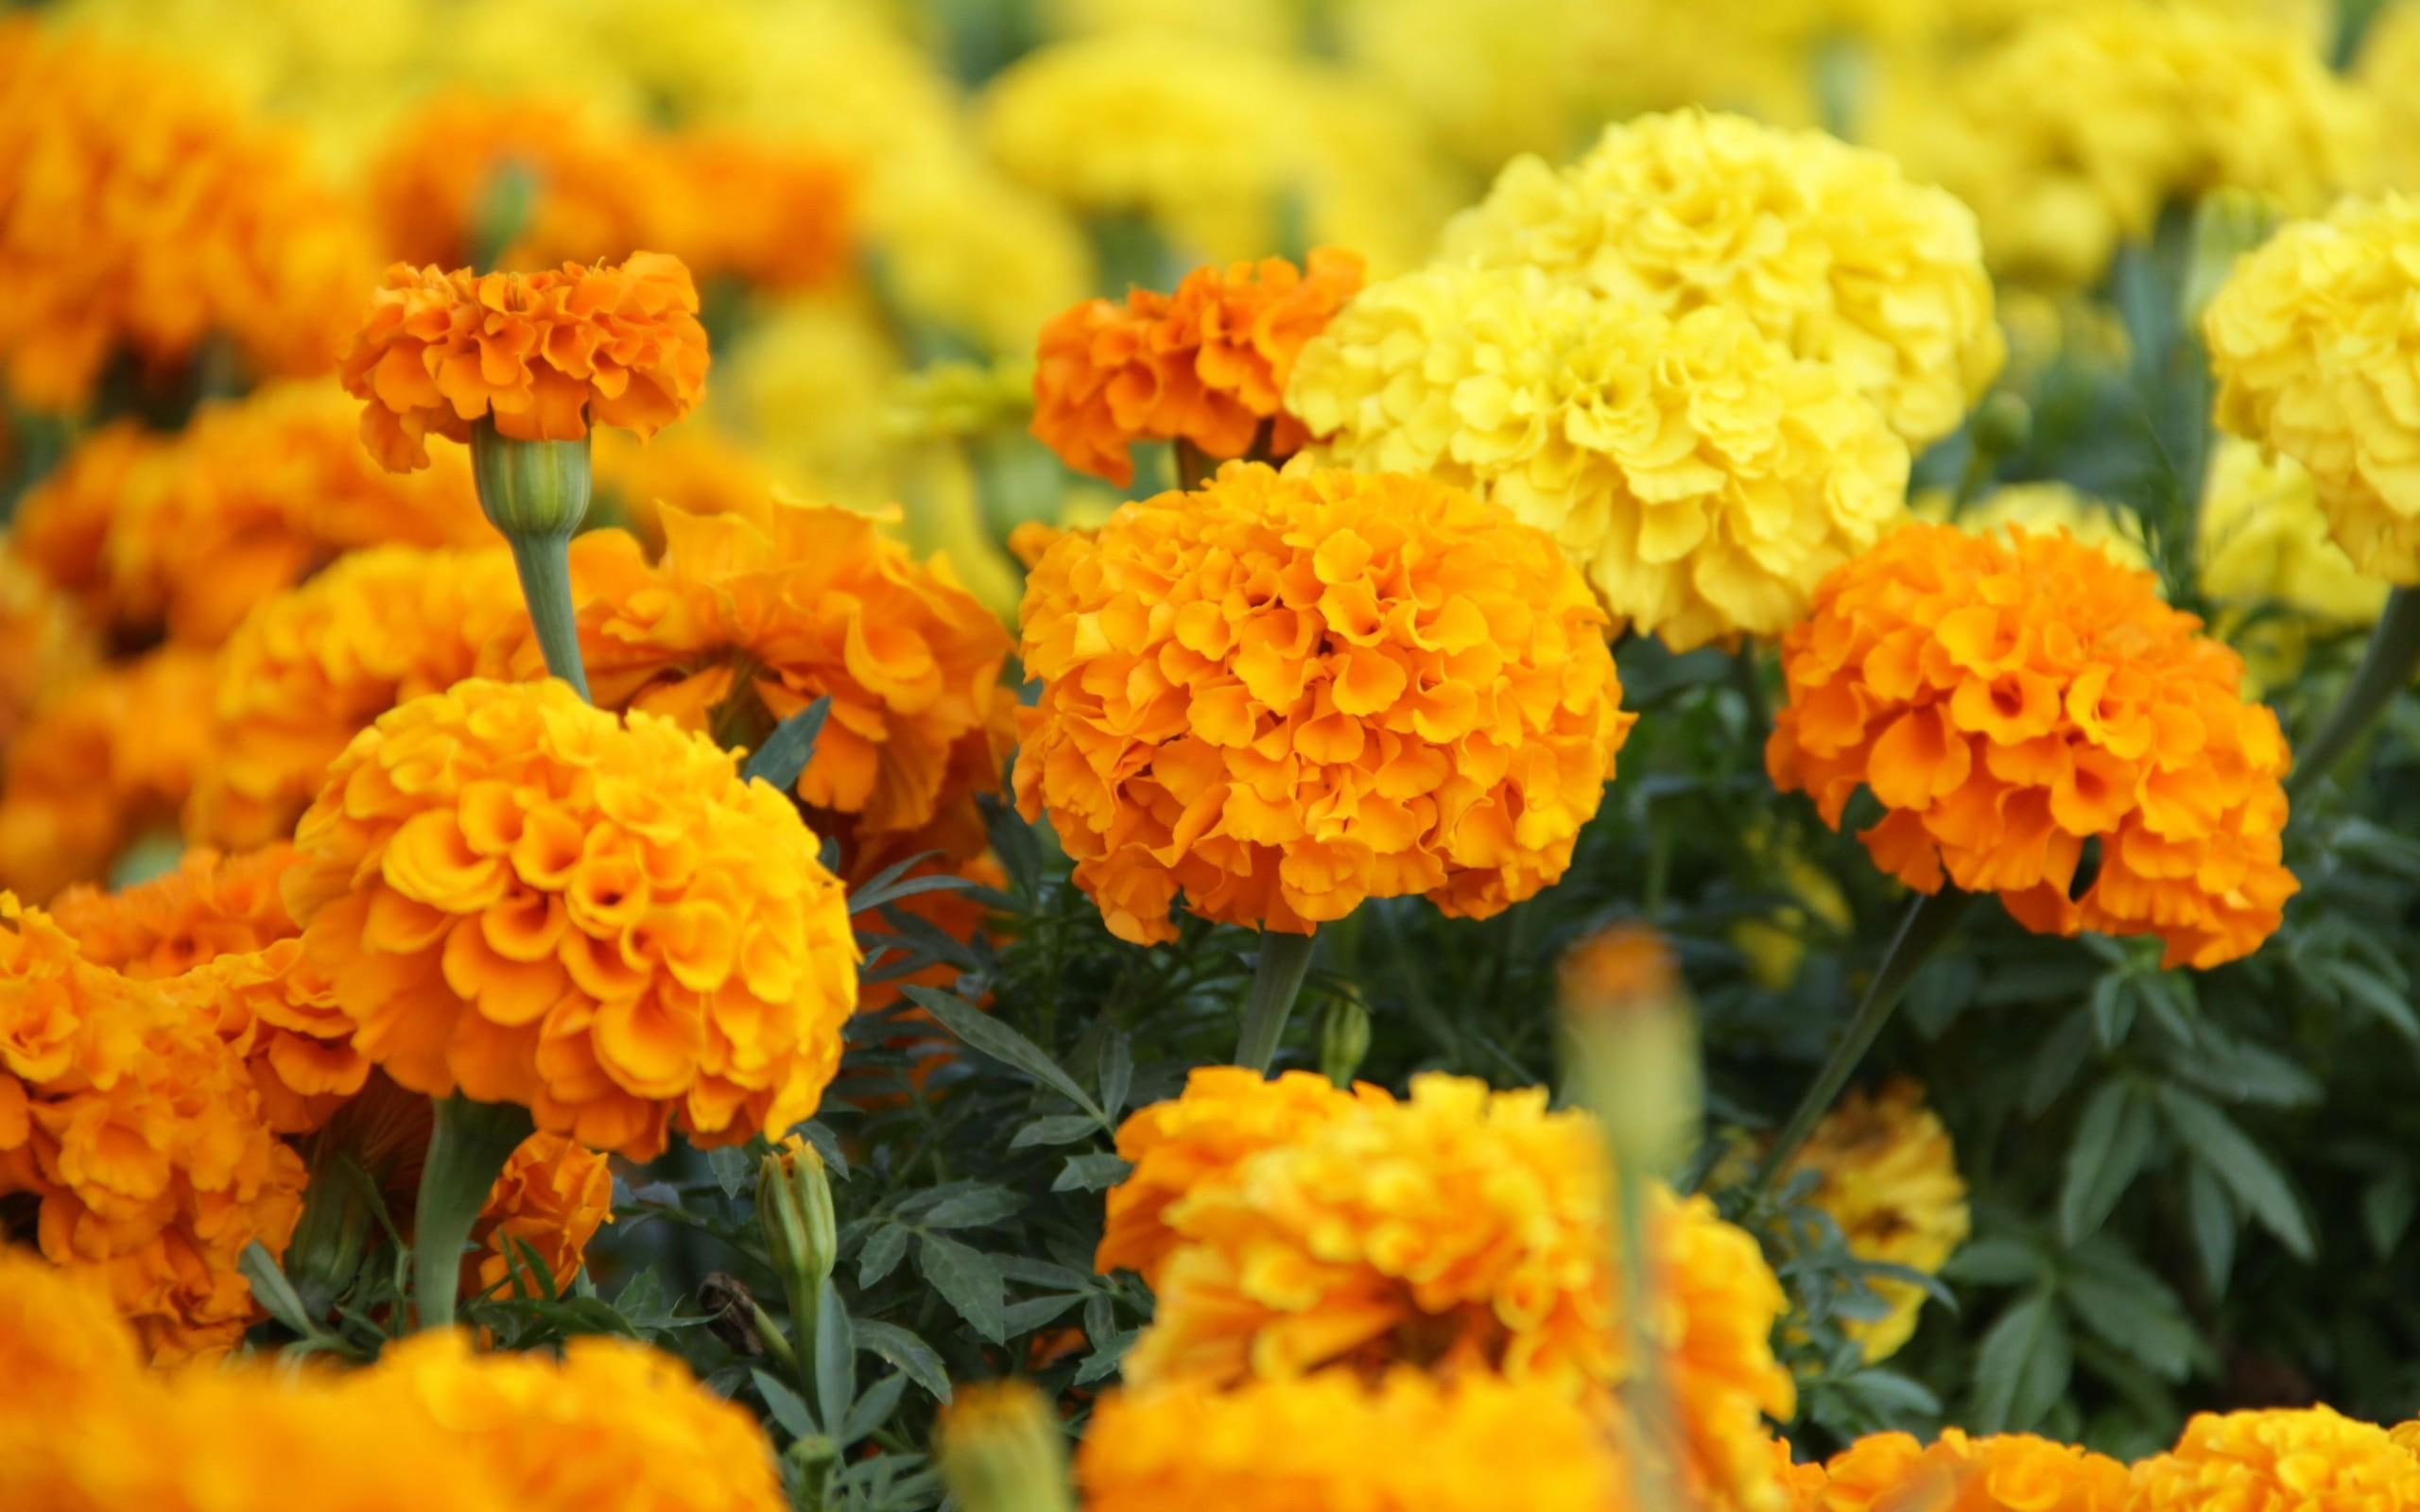 Wallpaper Marigolds, Orange And Yellow